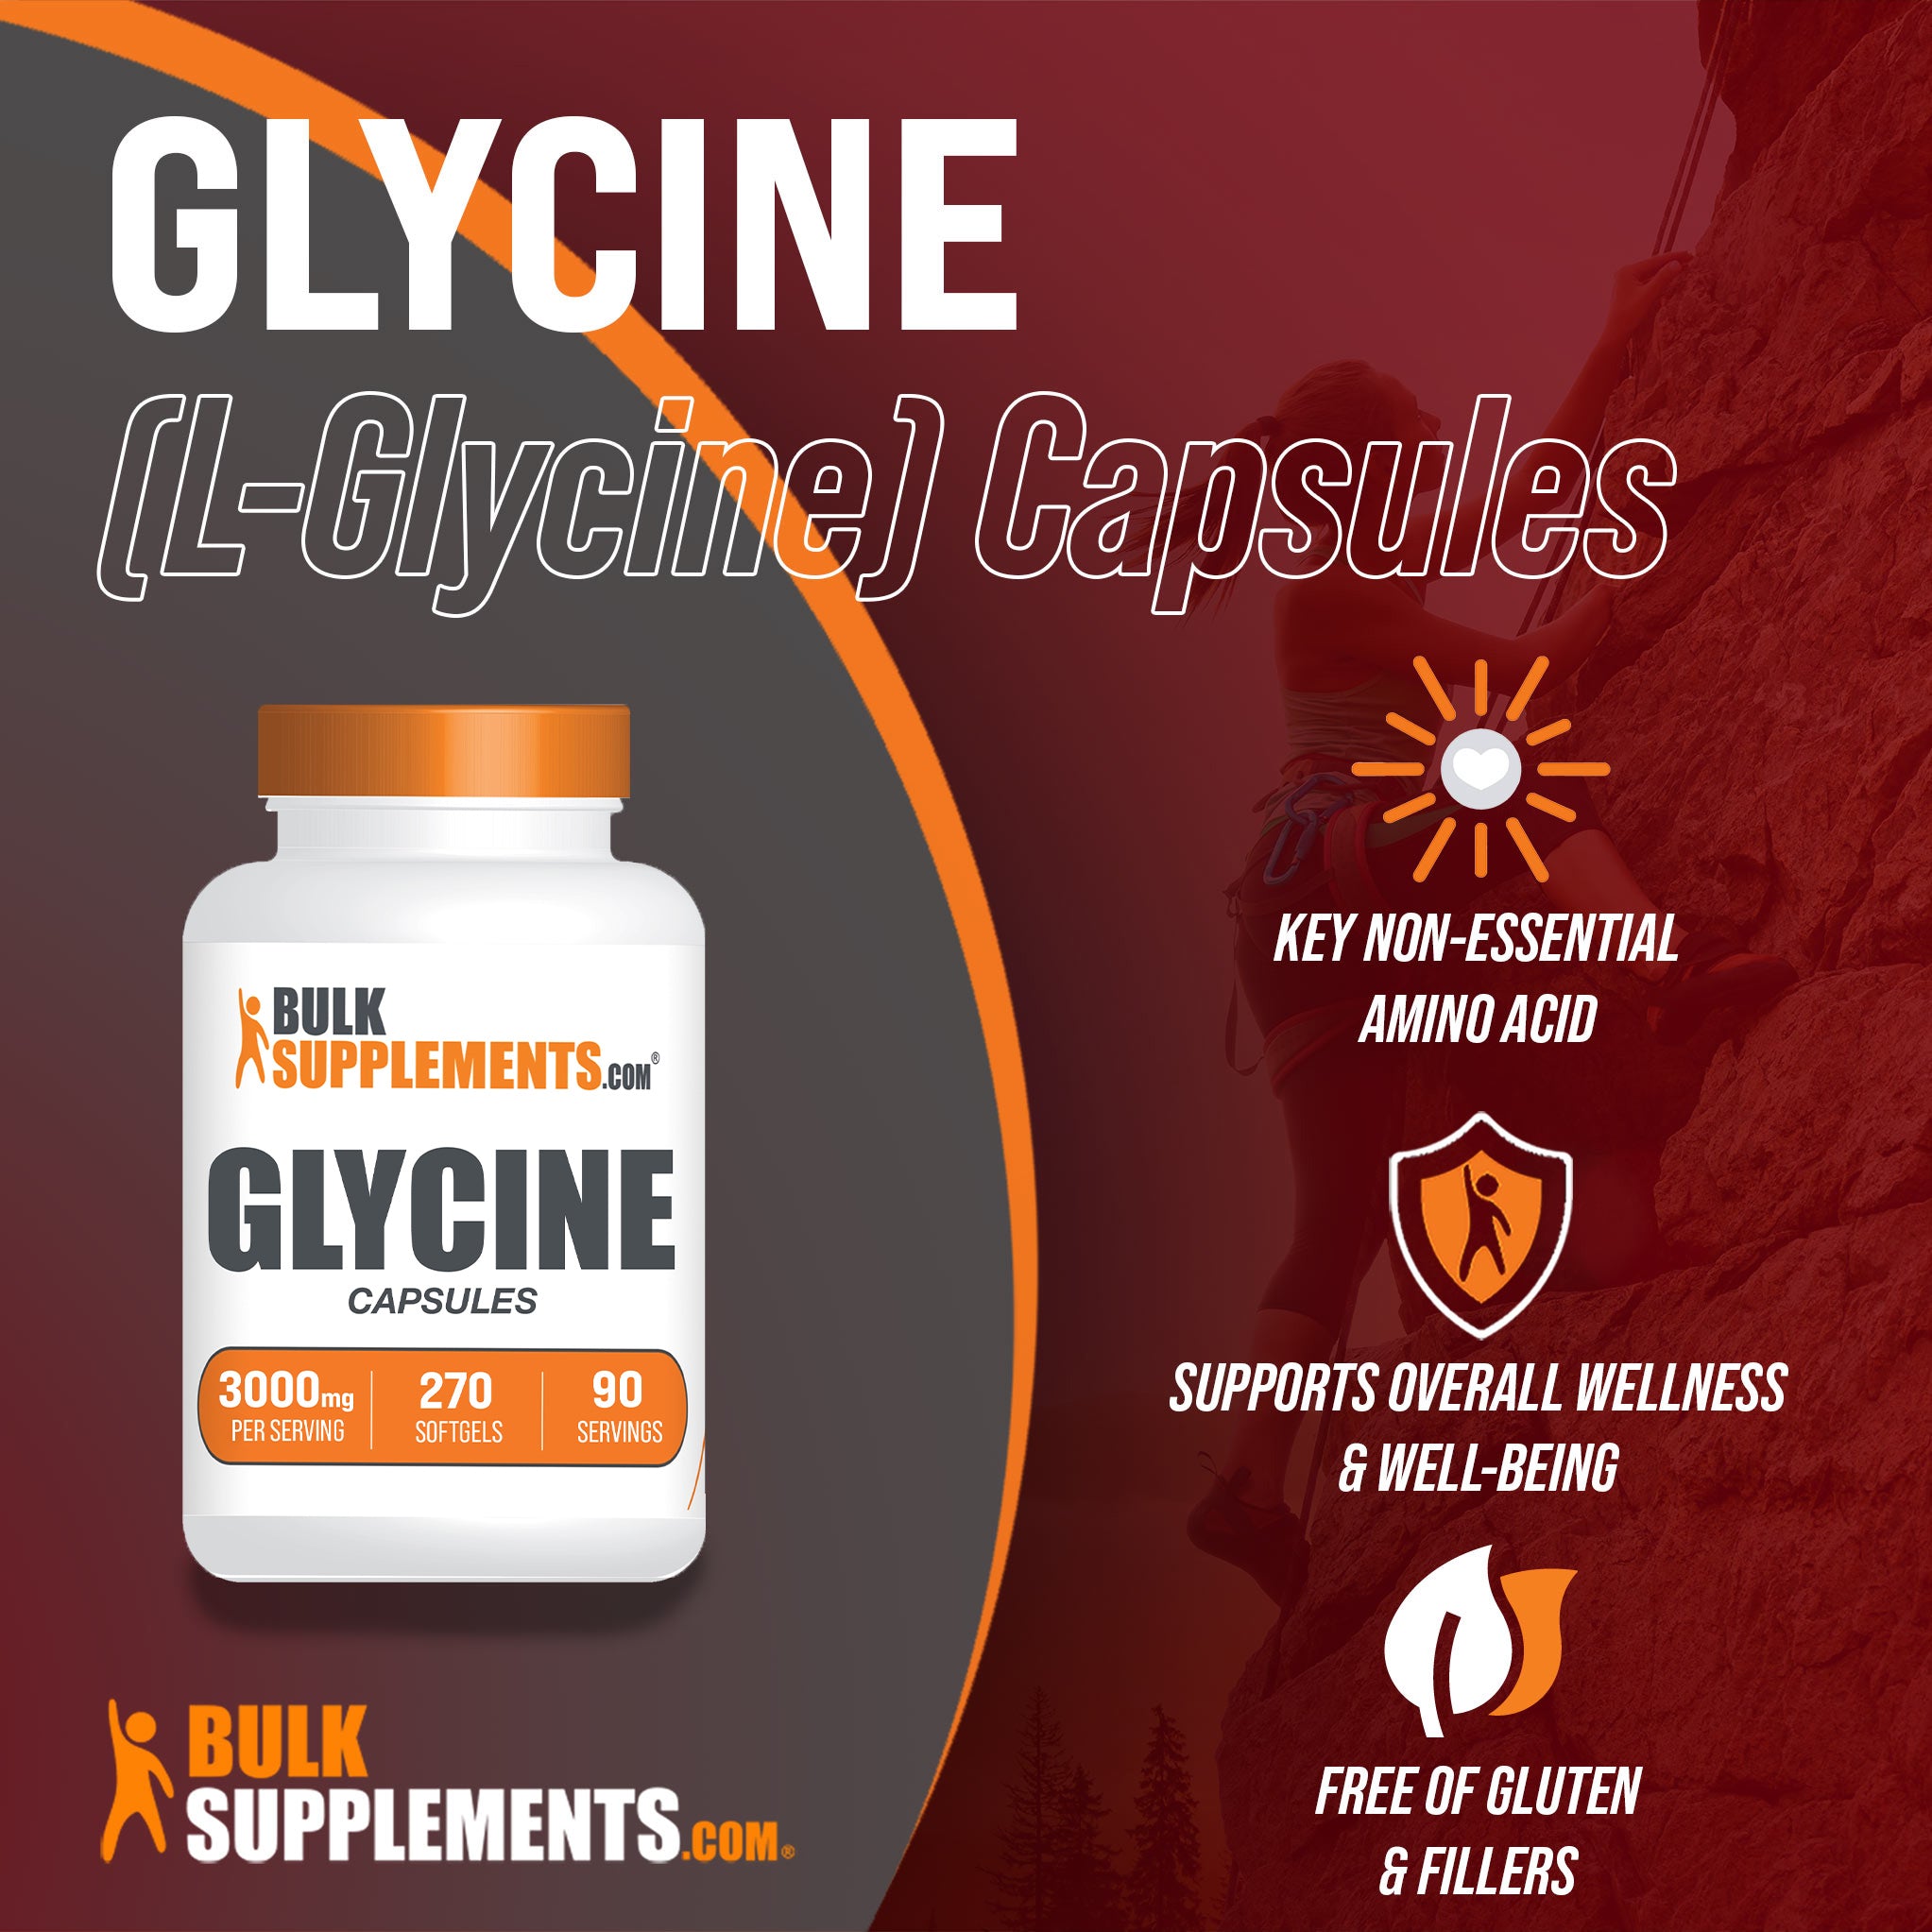 Glycine pills benefits essential amino acid supplement